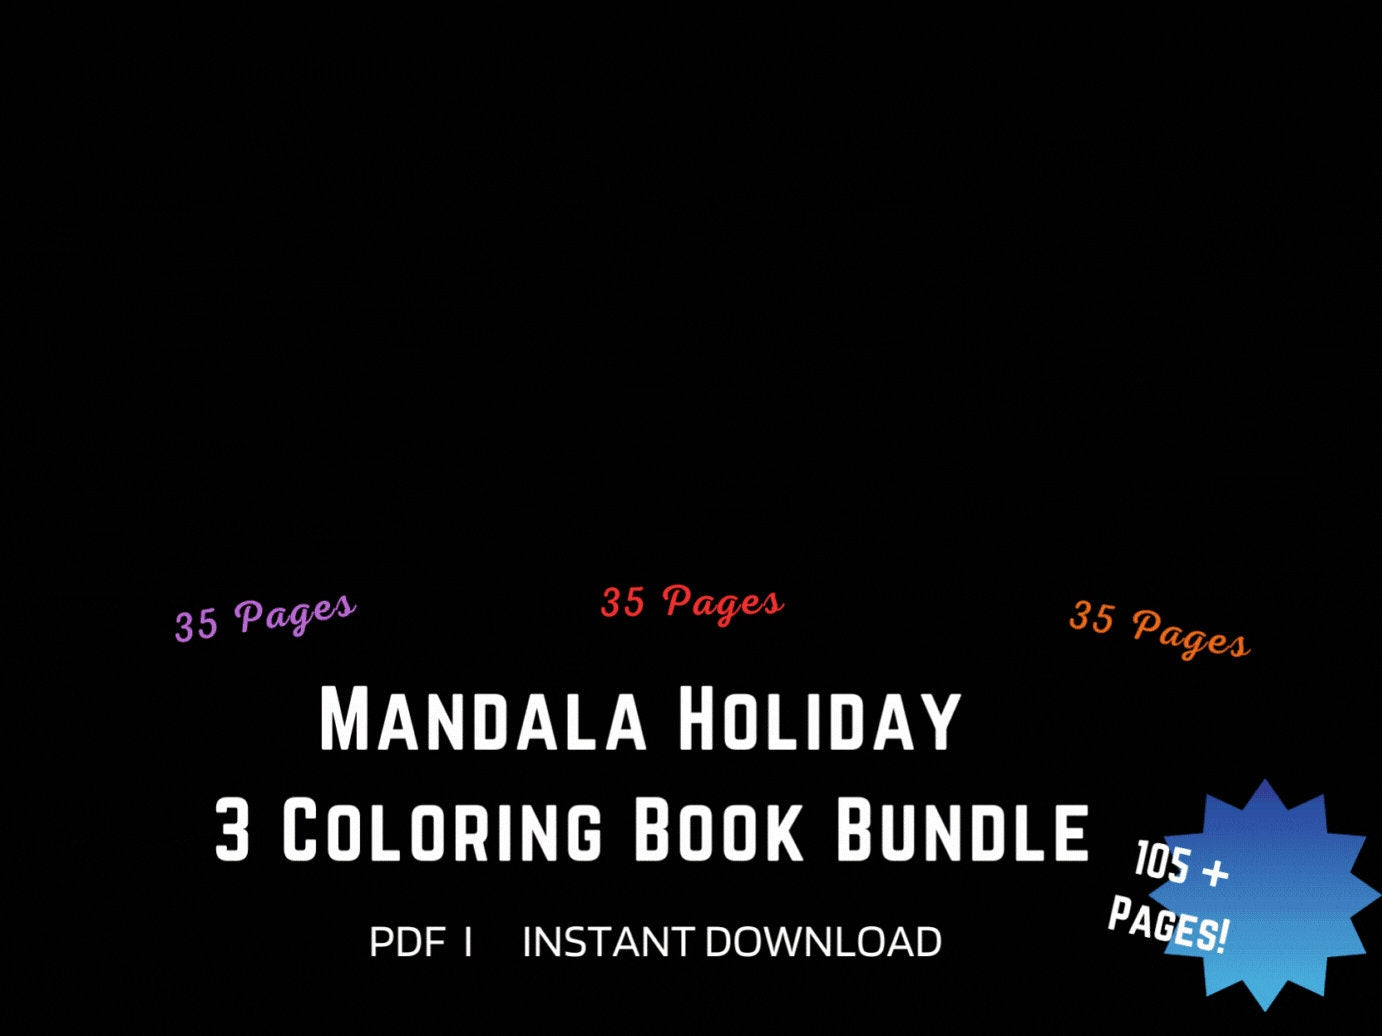 105 Mandala MEGA pack coloring page book, instant download, printable PDF. Christmas, Thanksgiving and Halloween Mandalas. For adults & kids